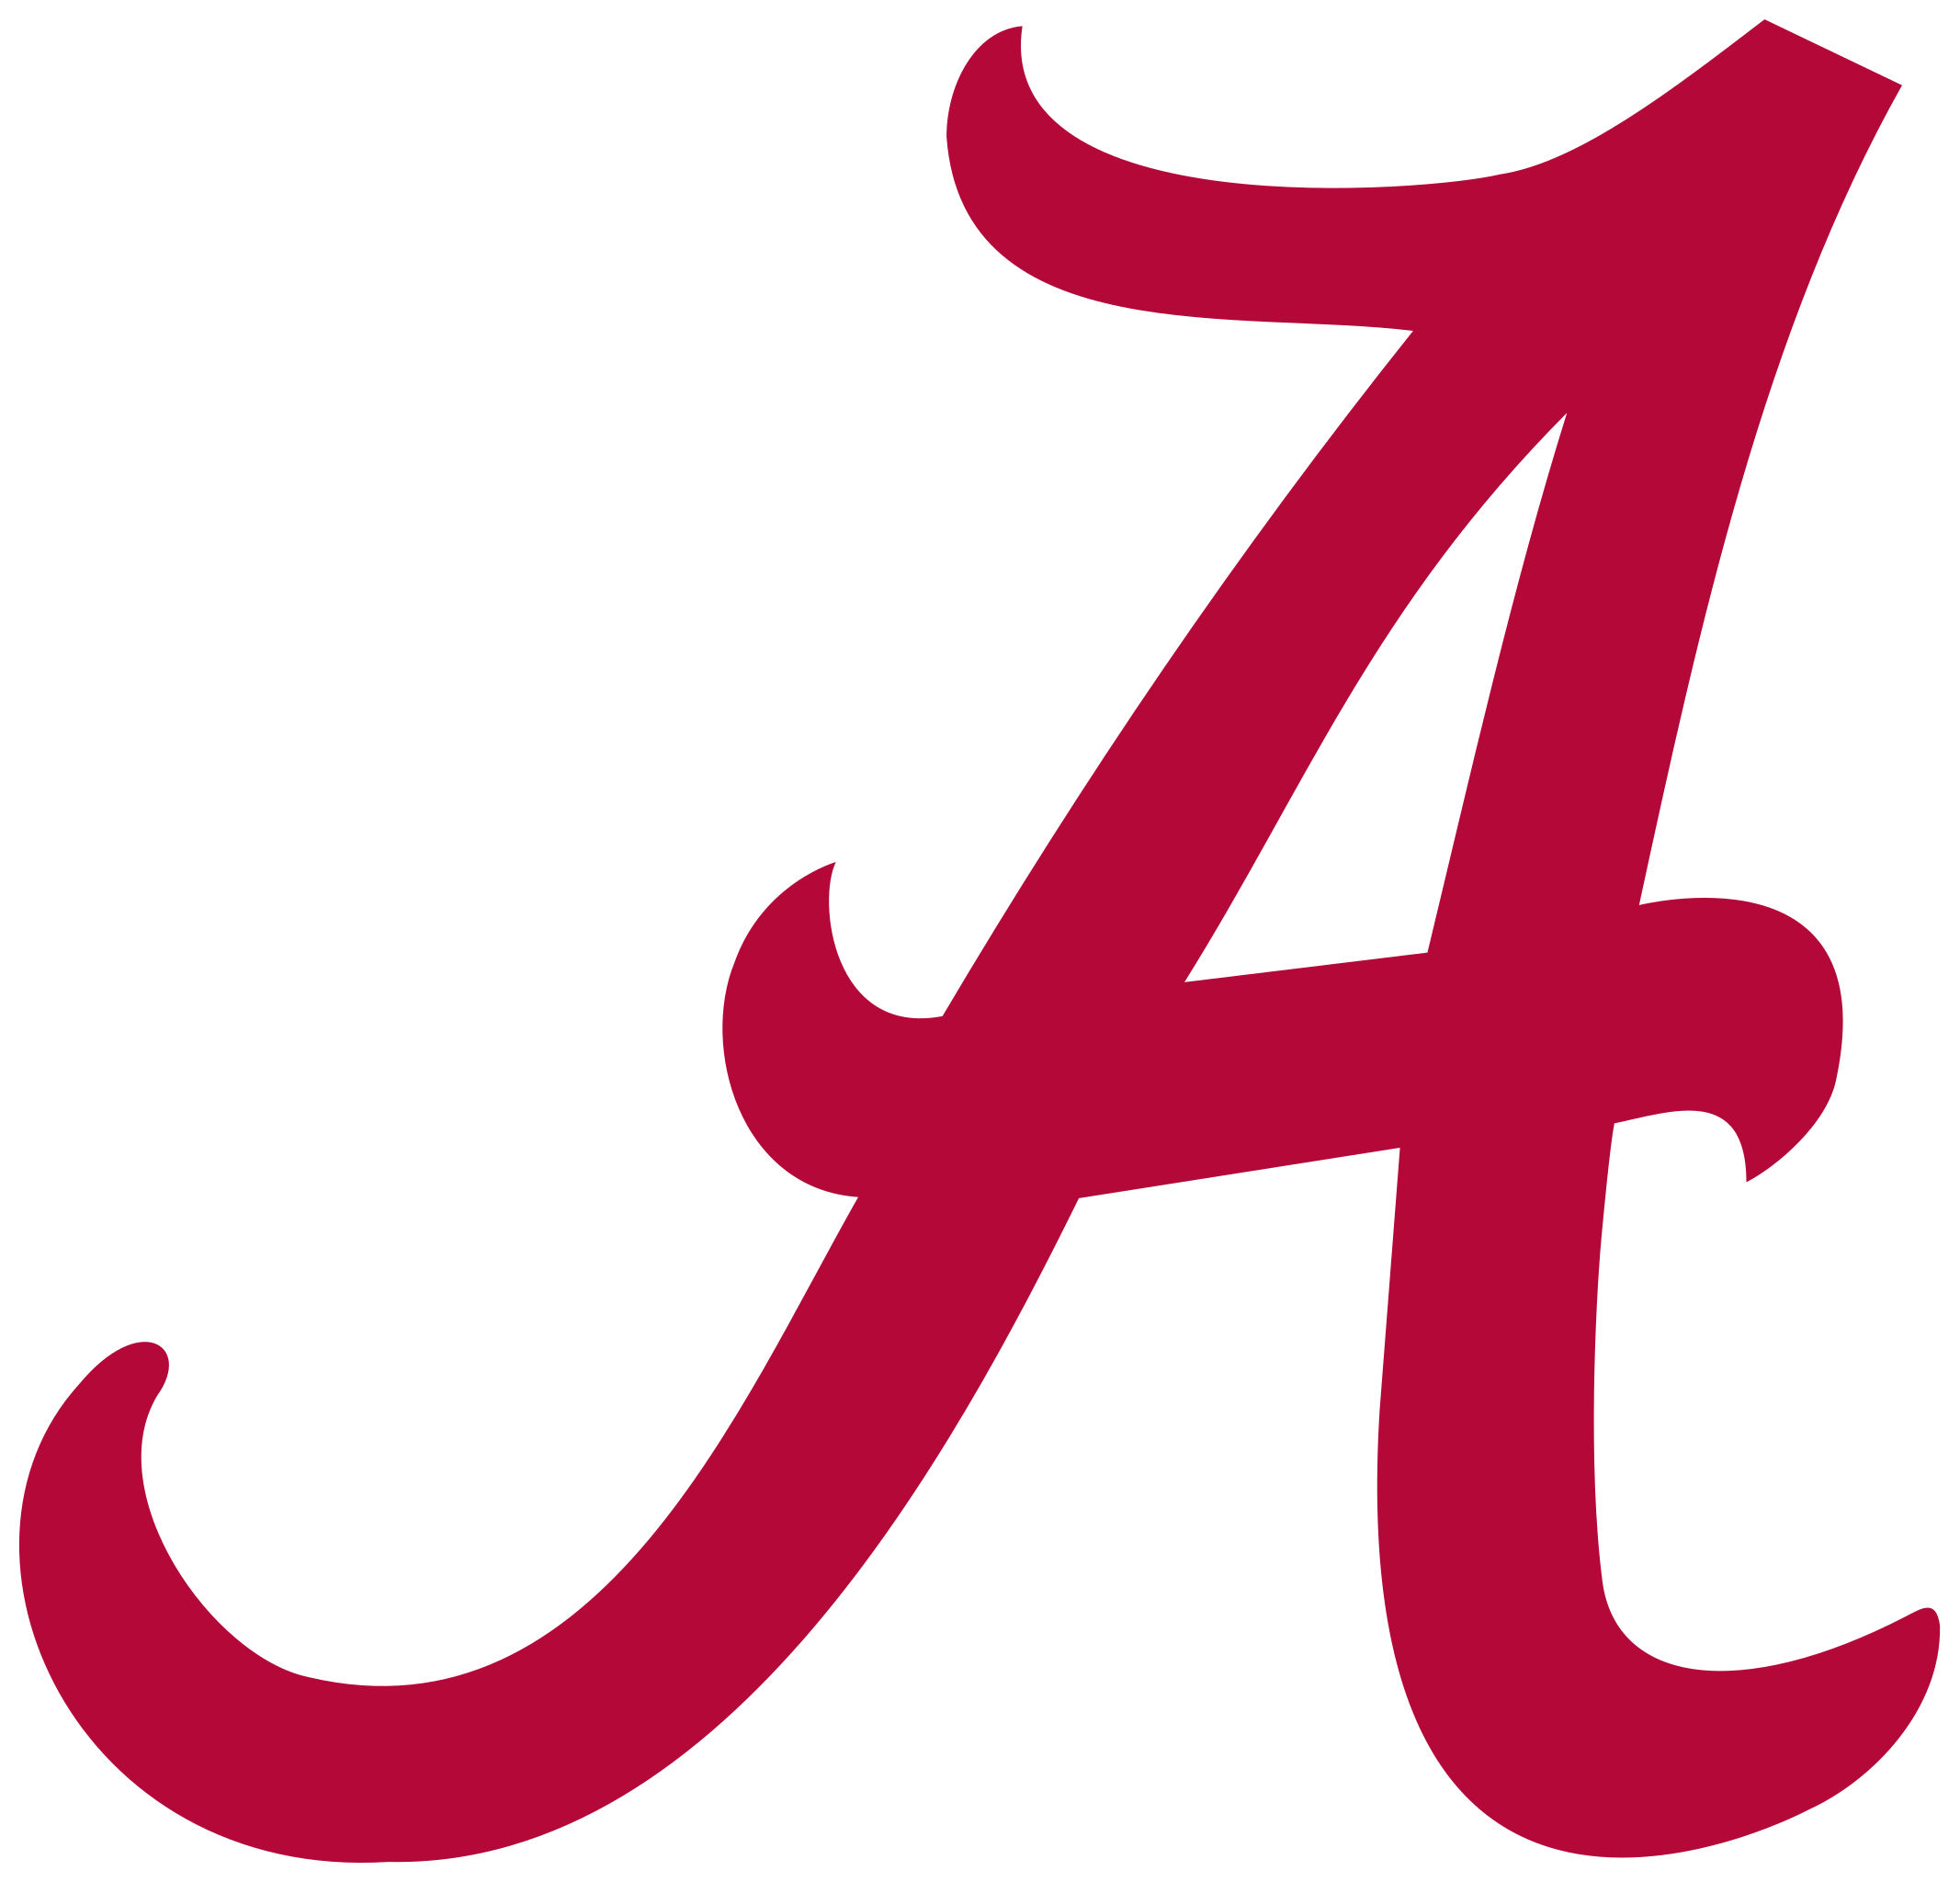 Alabama_Athletics_logo.svg